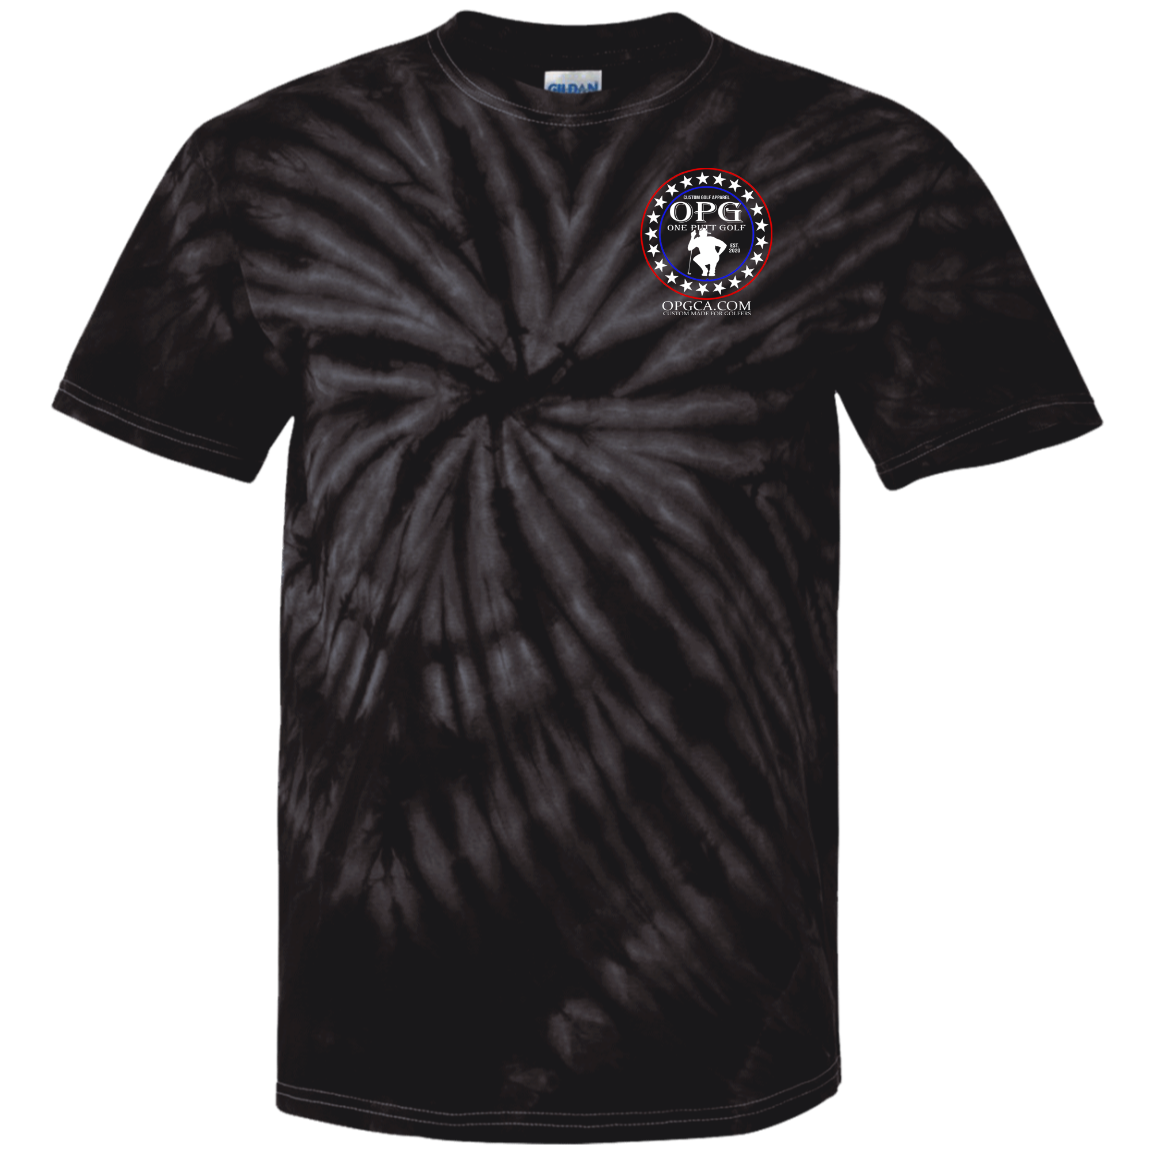 OPG Custom Design #18. Weapons of Grass Destruction. 100% Cotton Tie Dye T-Shirt